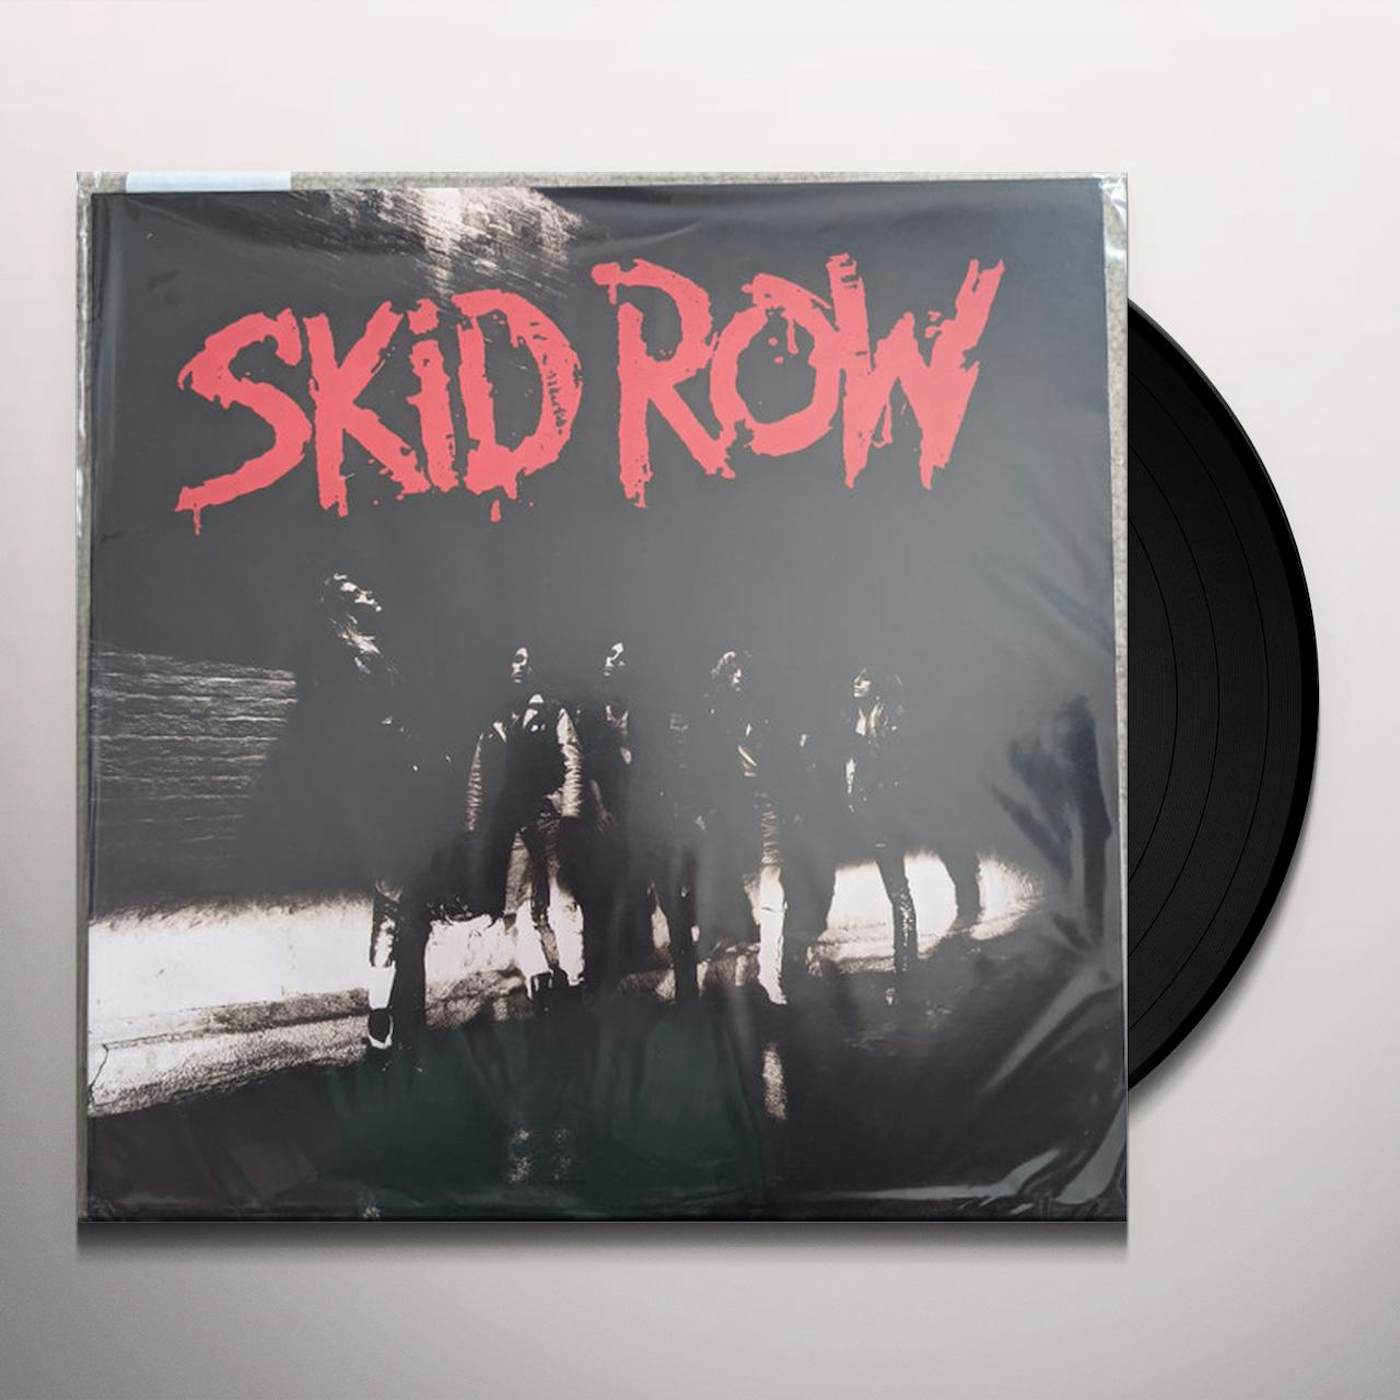 SKID ROW (180G/SILVER METALLIC VINYL/LIMITED/AMS EXCLUSIVE) Vinyl Record